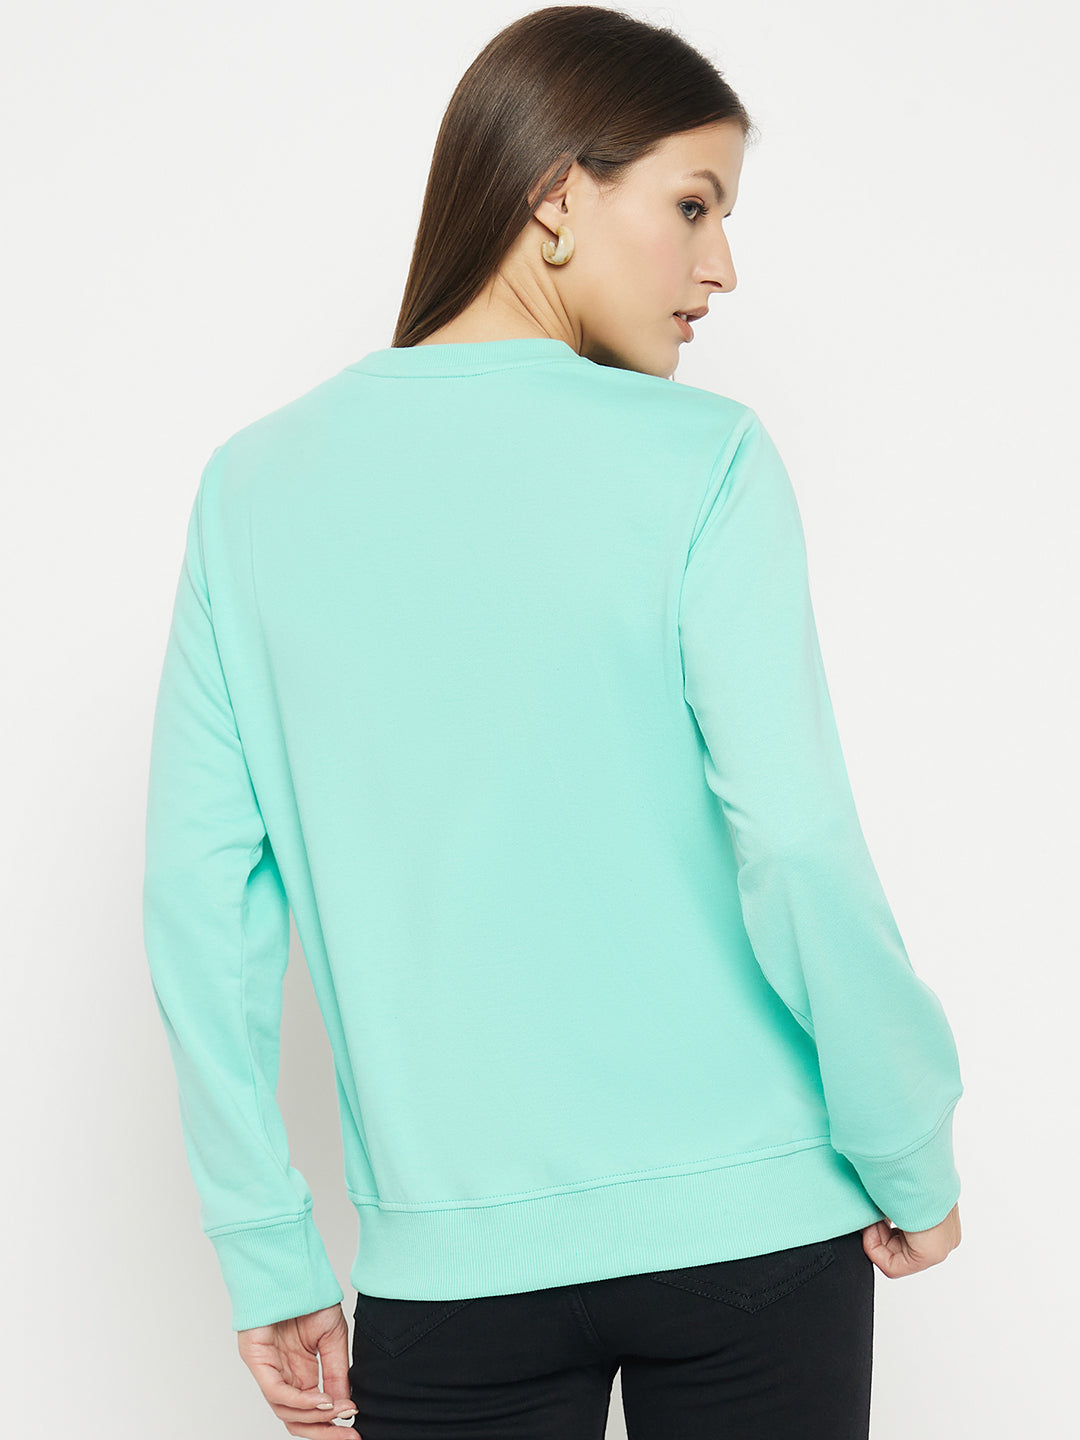 Women's Printed Mint Sweatshirt